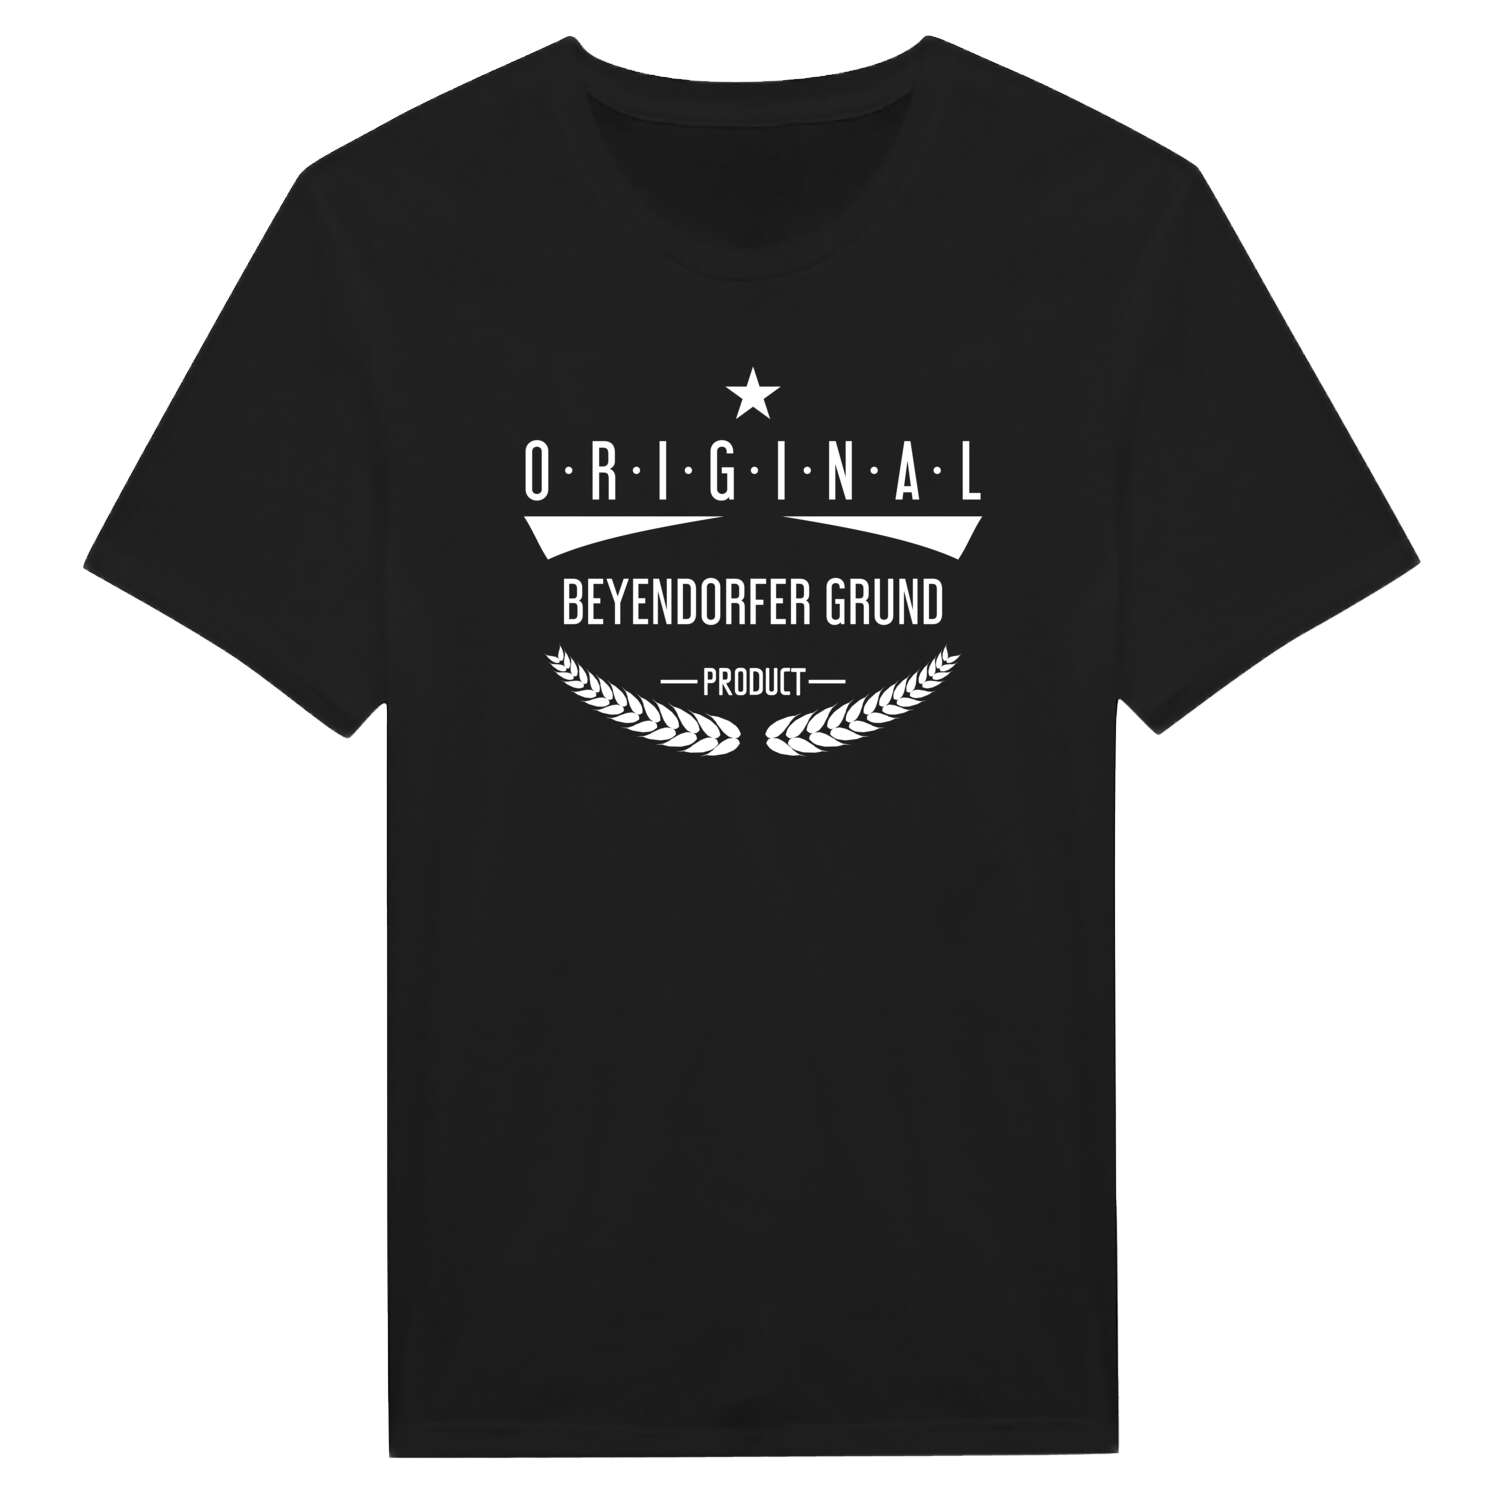 Beyendorfer Grund T-Shirt »Original Product«